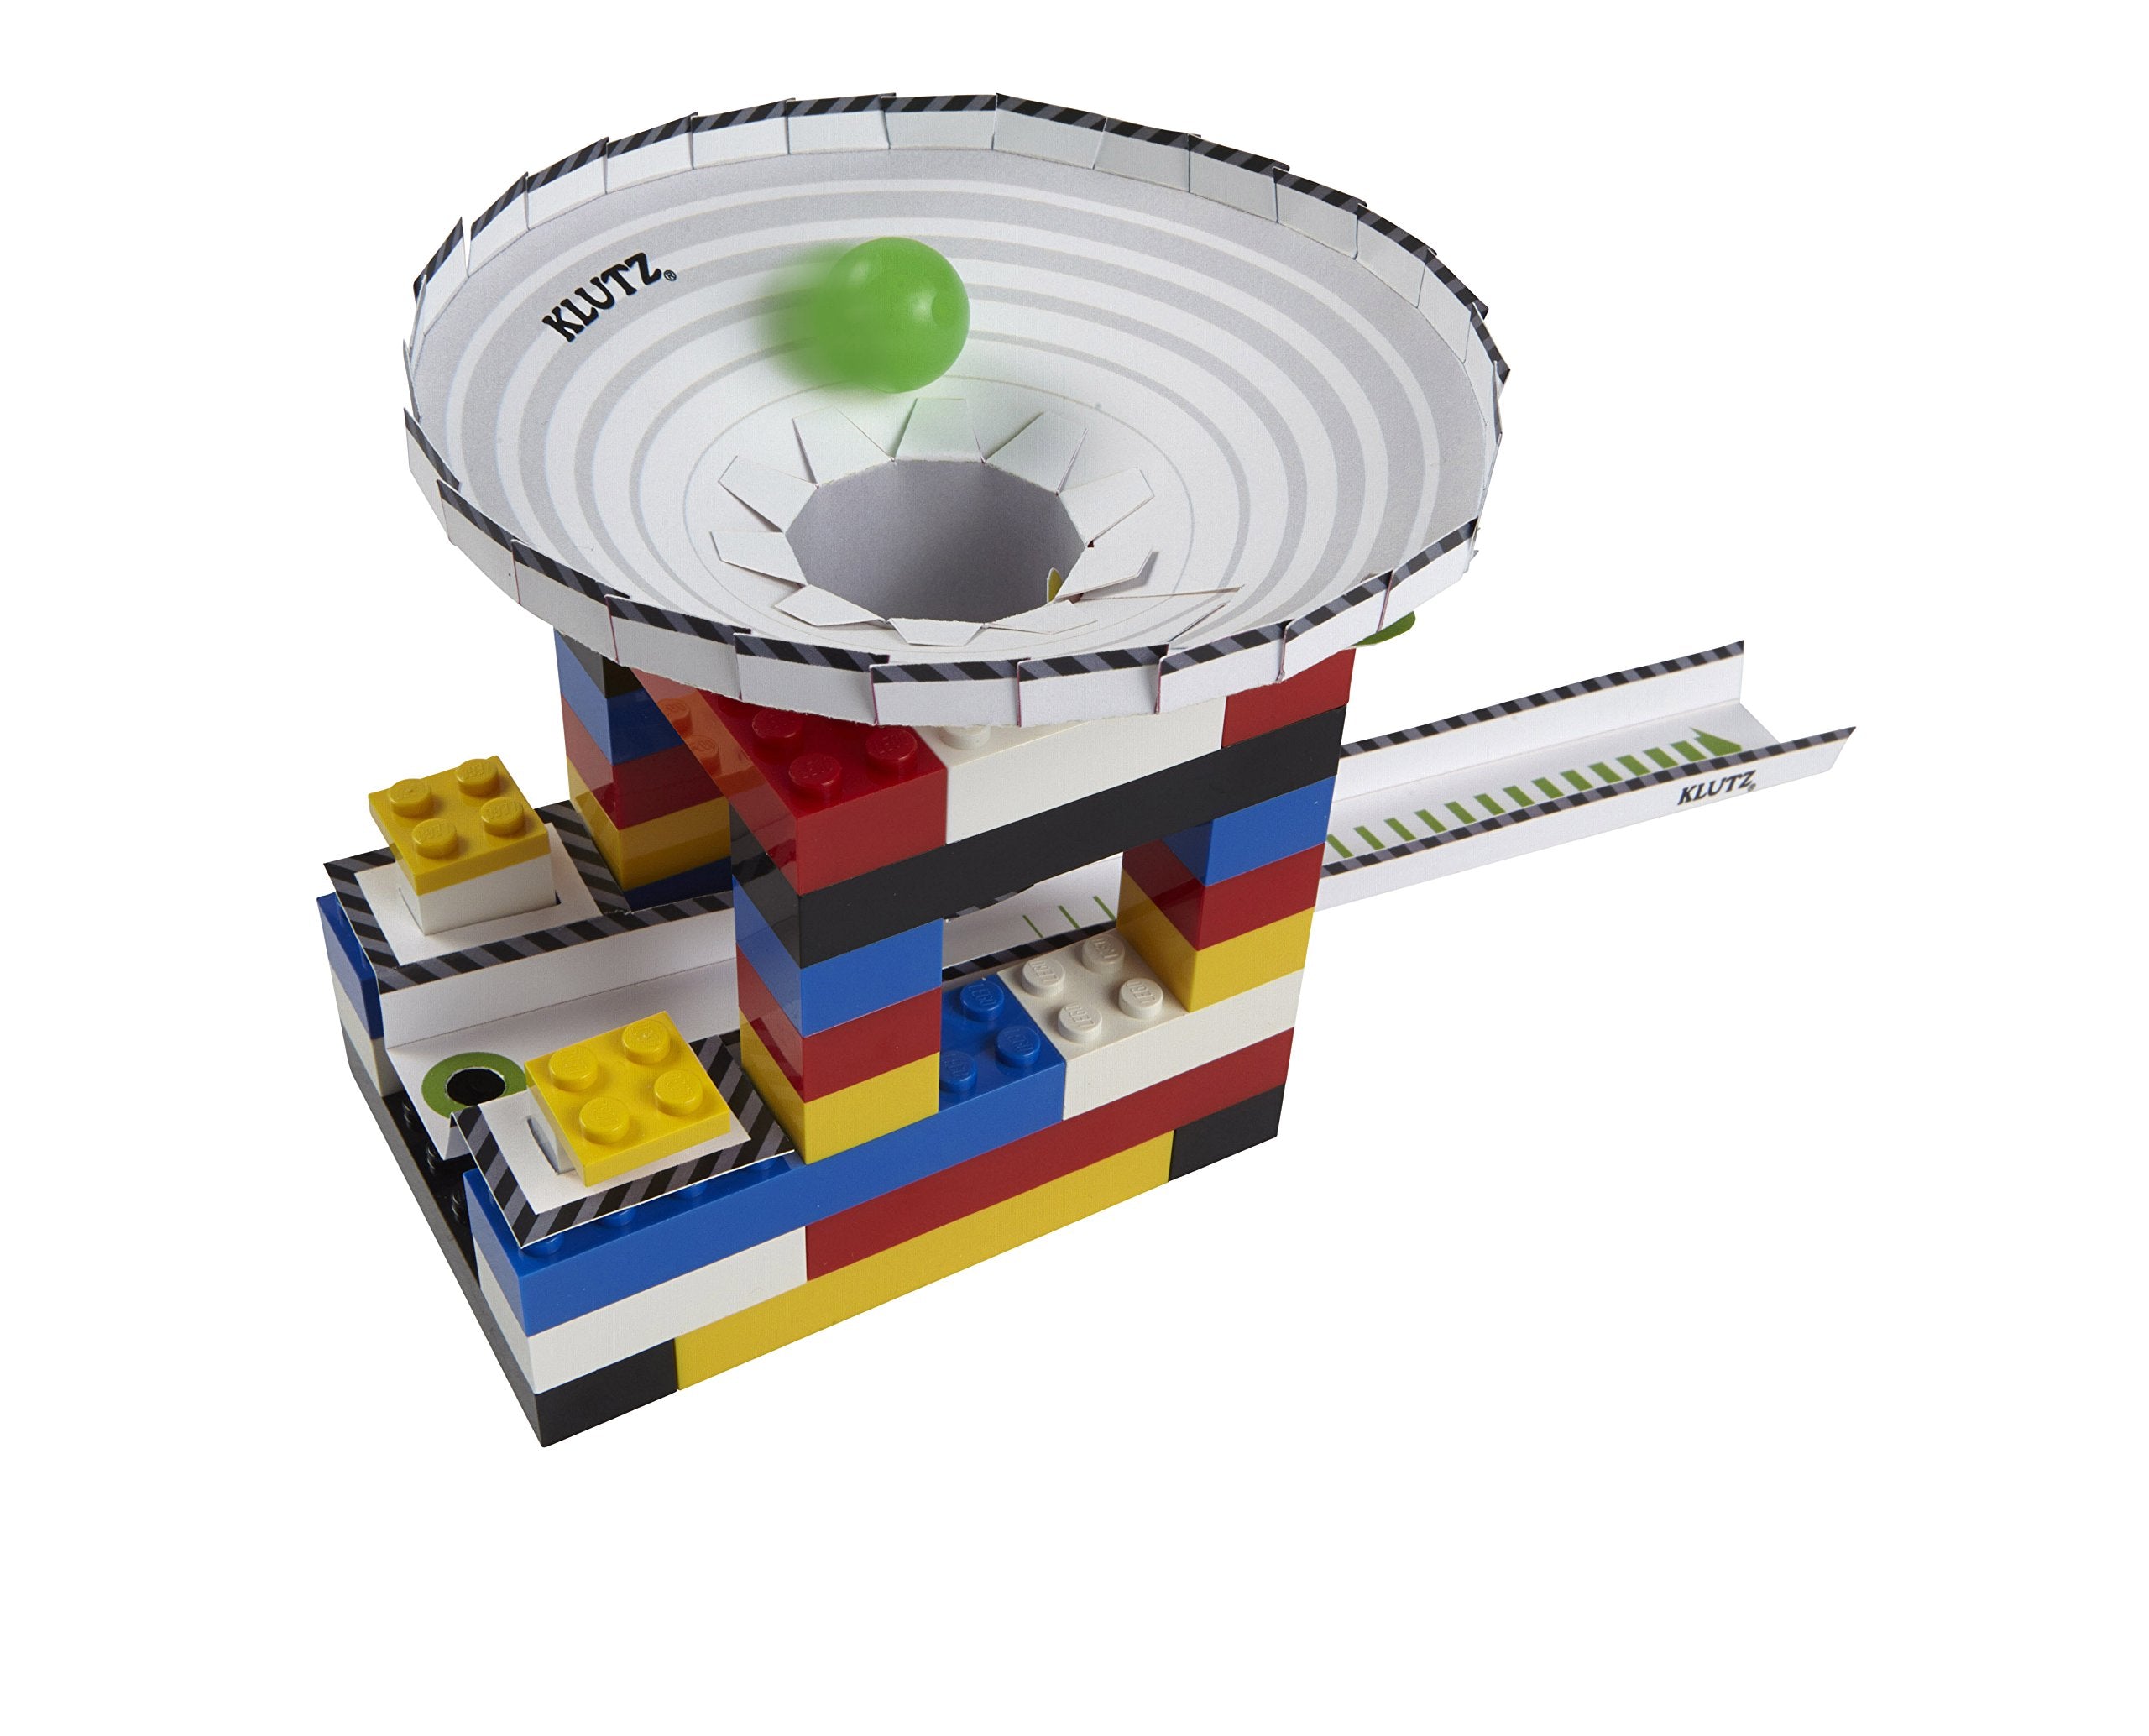 Klutz Lego Chain Reactions Science & Building Kit, Age 8, Multicolor - Klutz - The English Bookshop